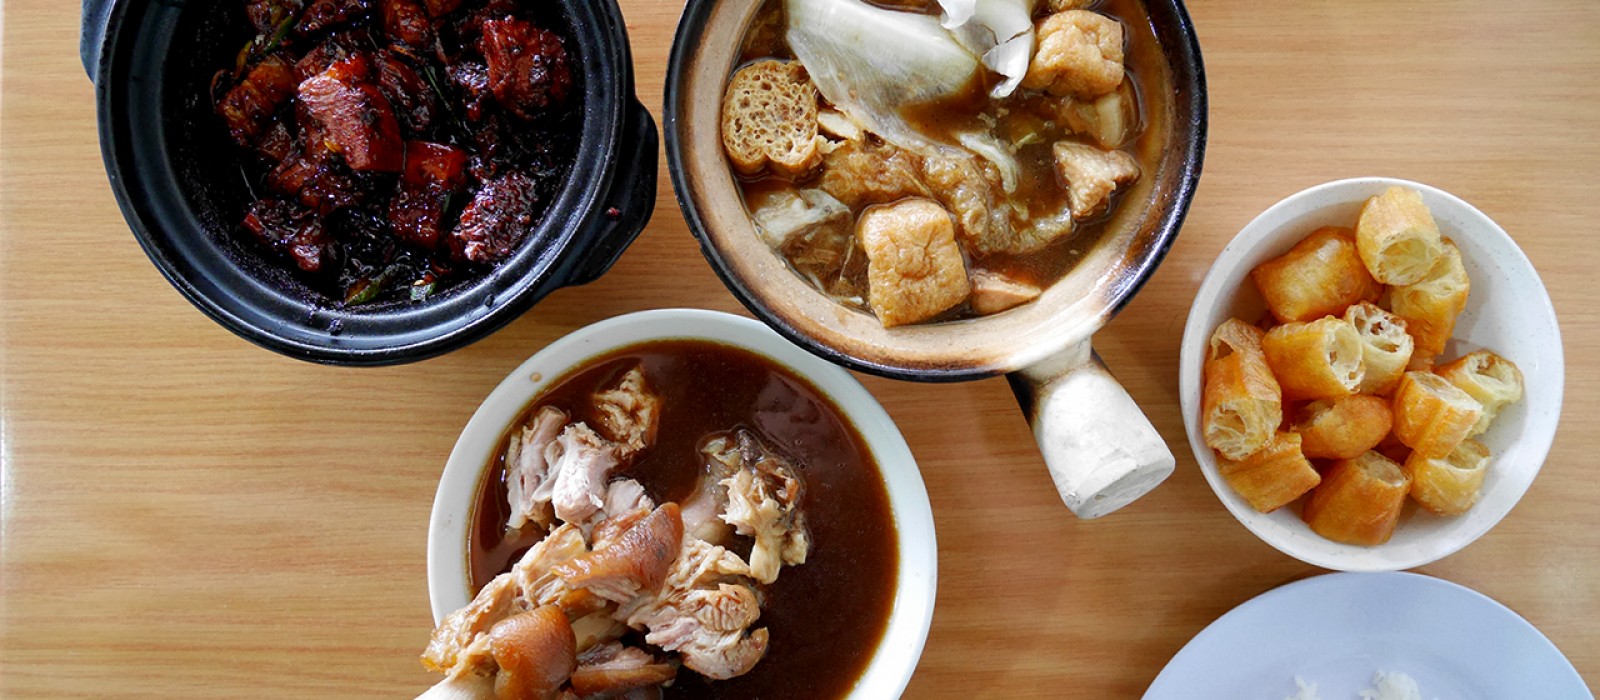 Bak Kut Teh, Pork bone and tea broth, popular in S.E Asia 